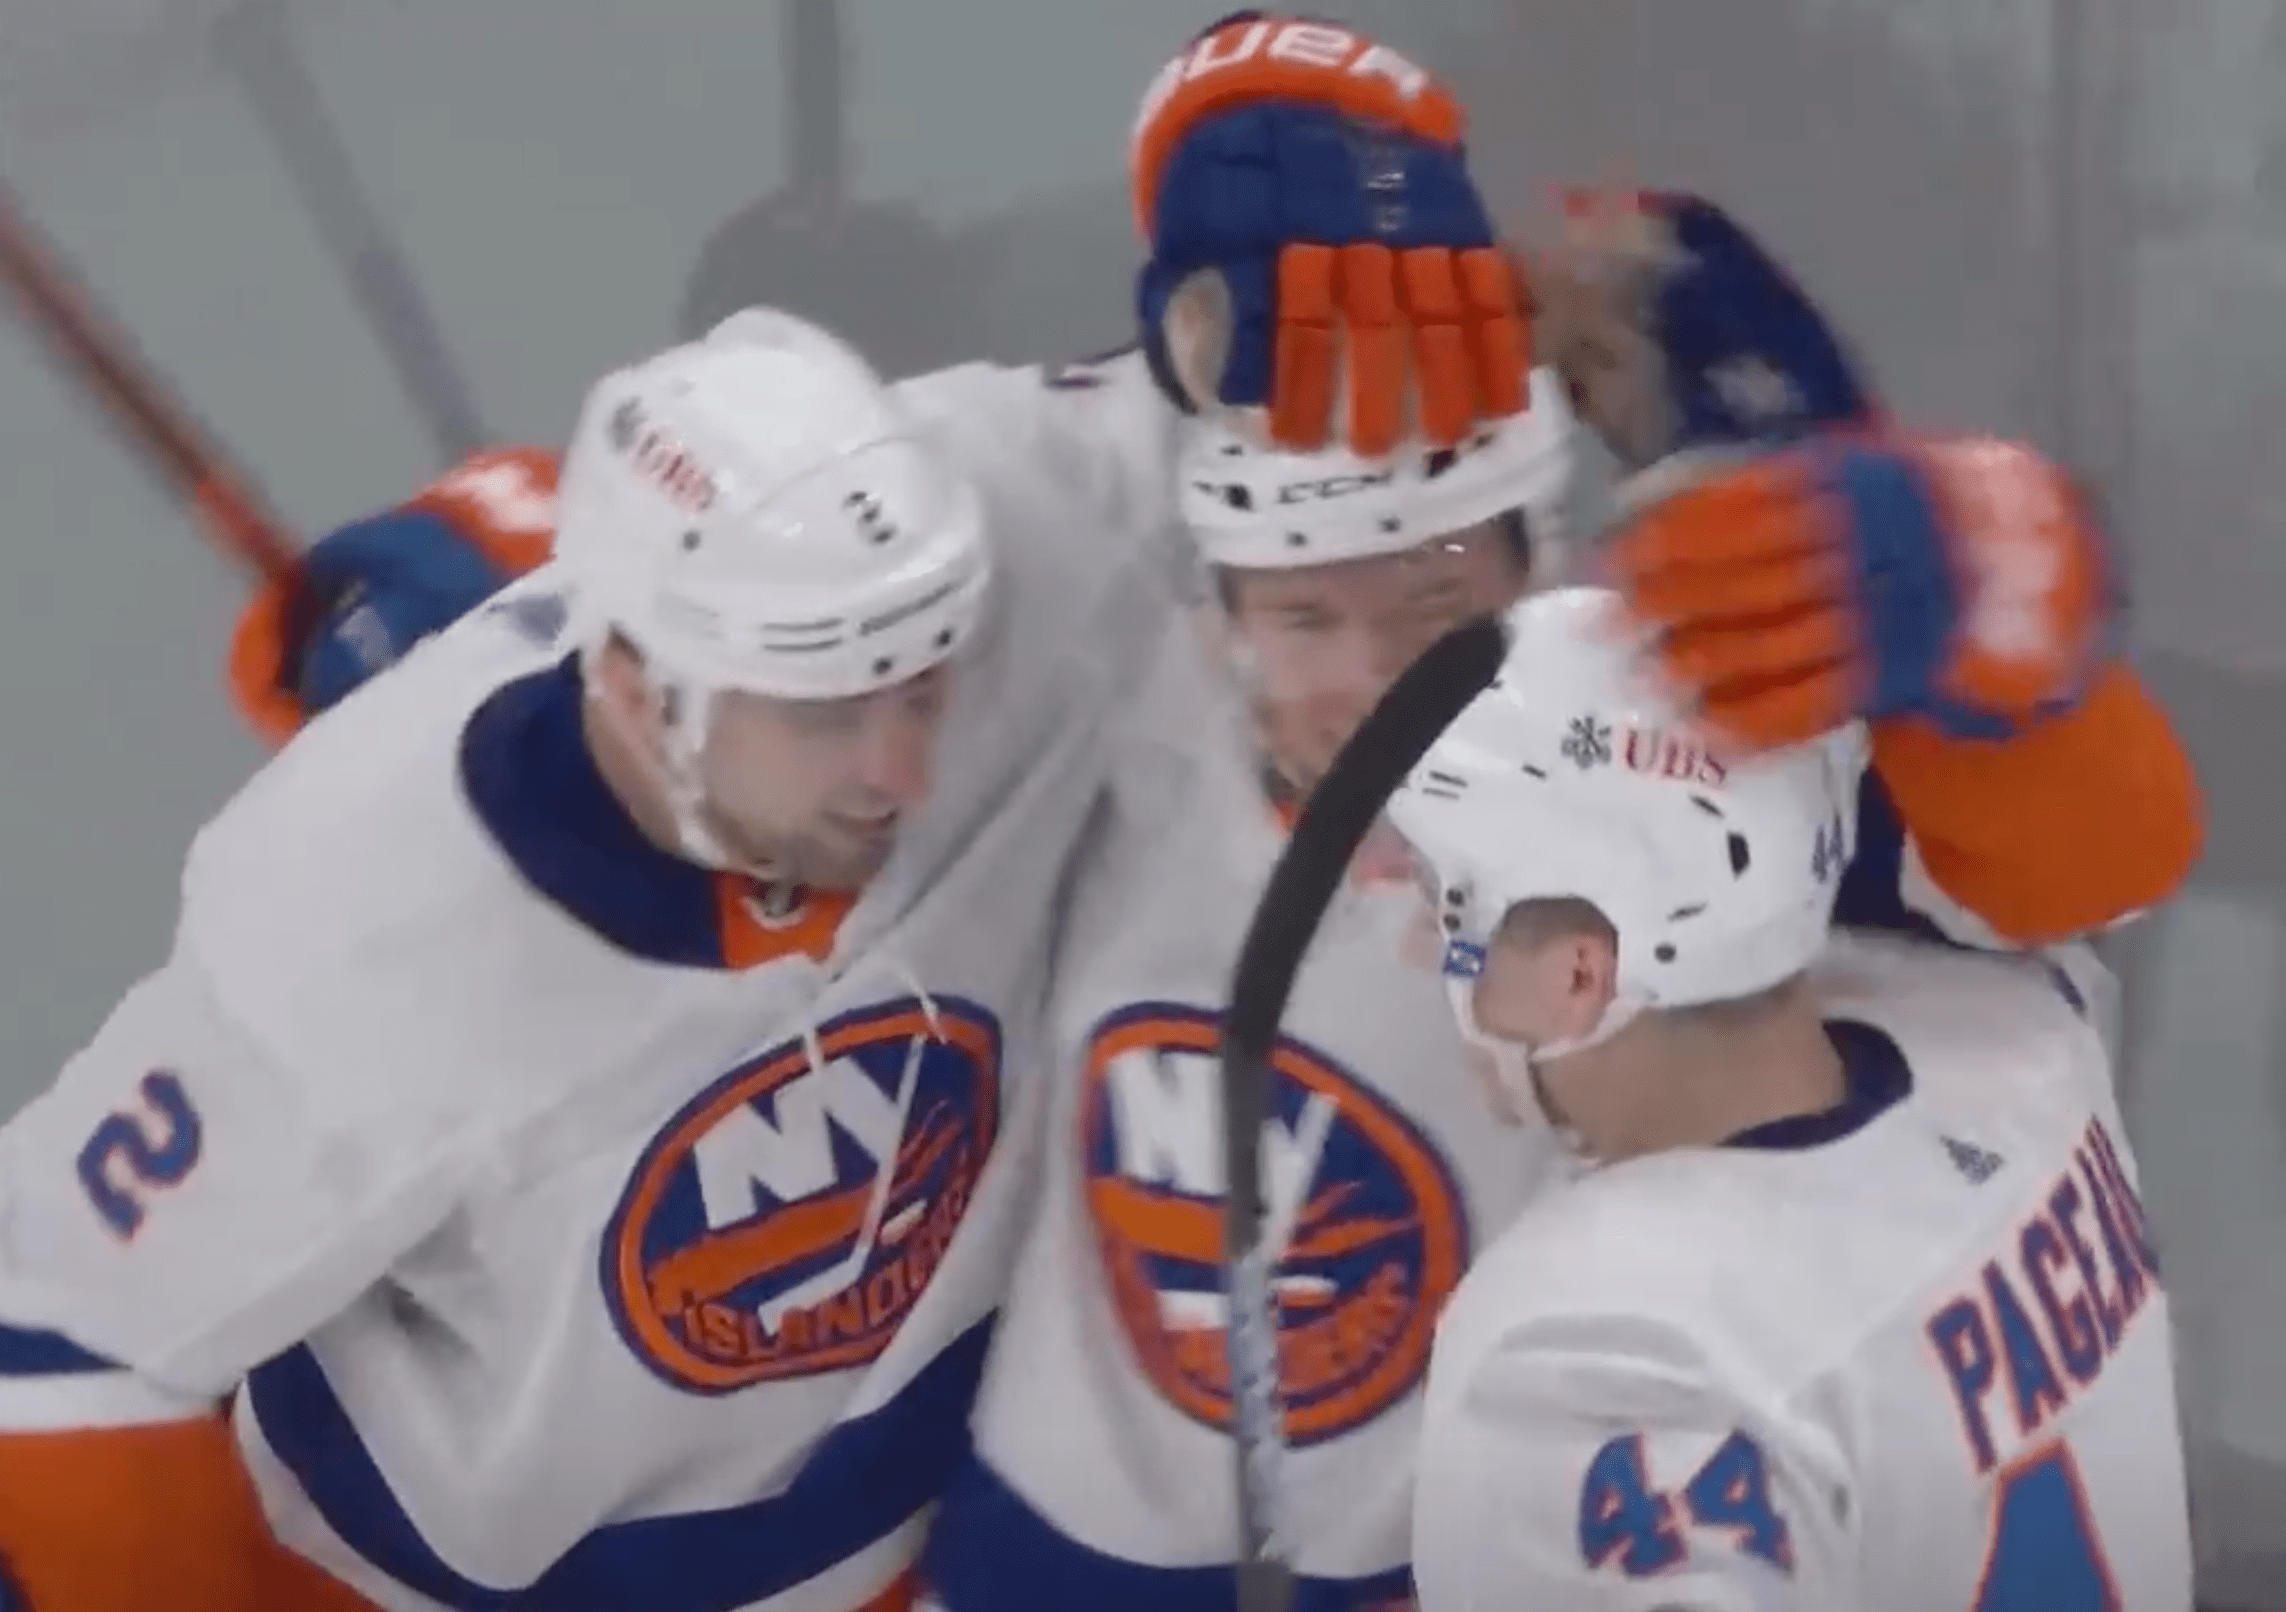 New York Islanders win